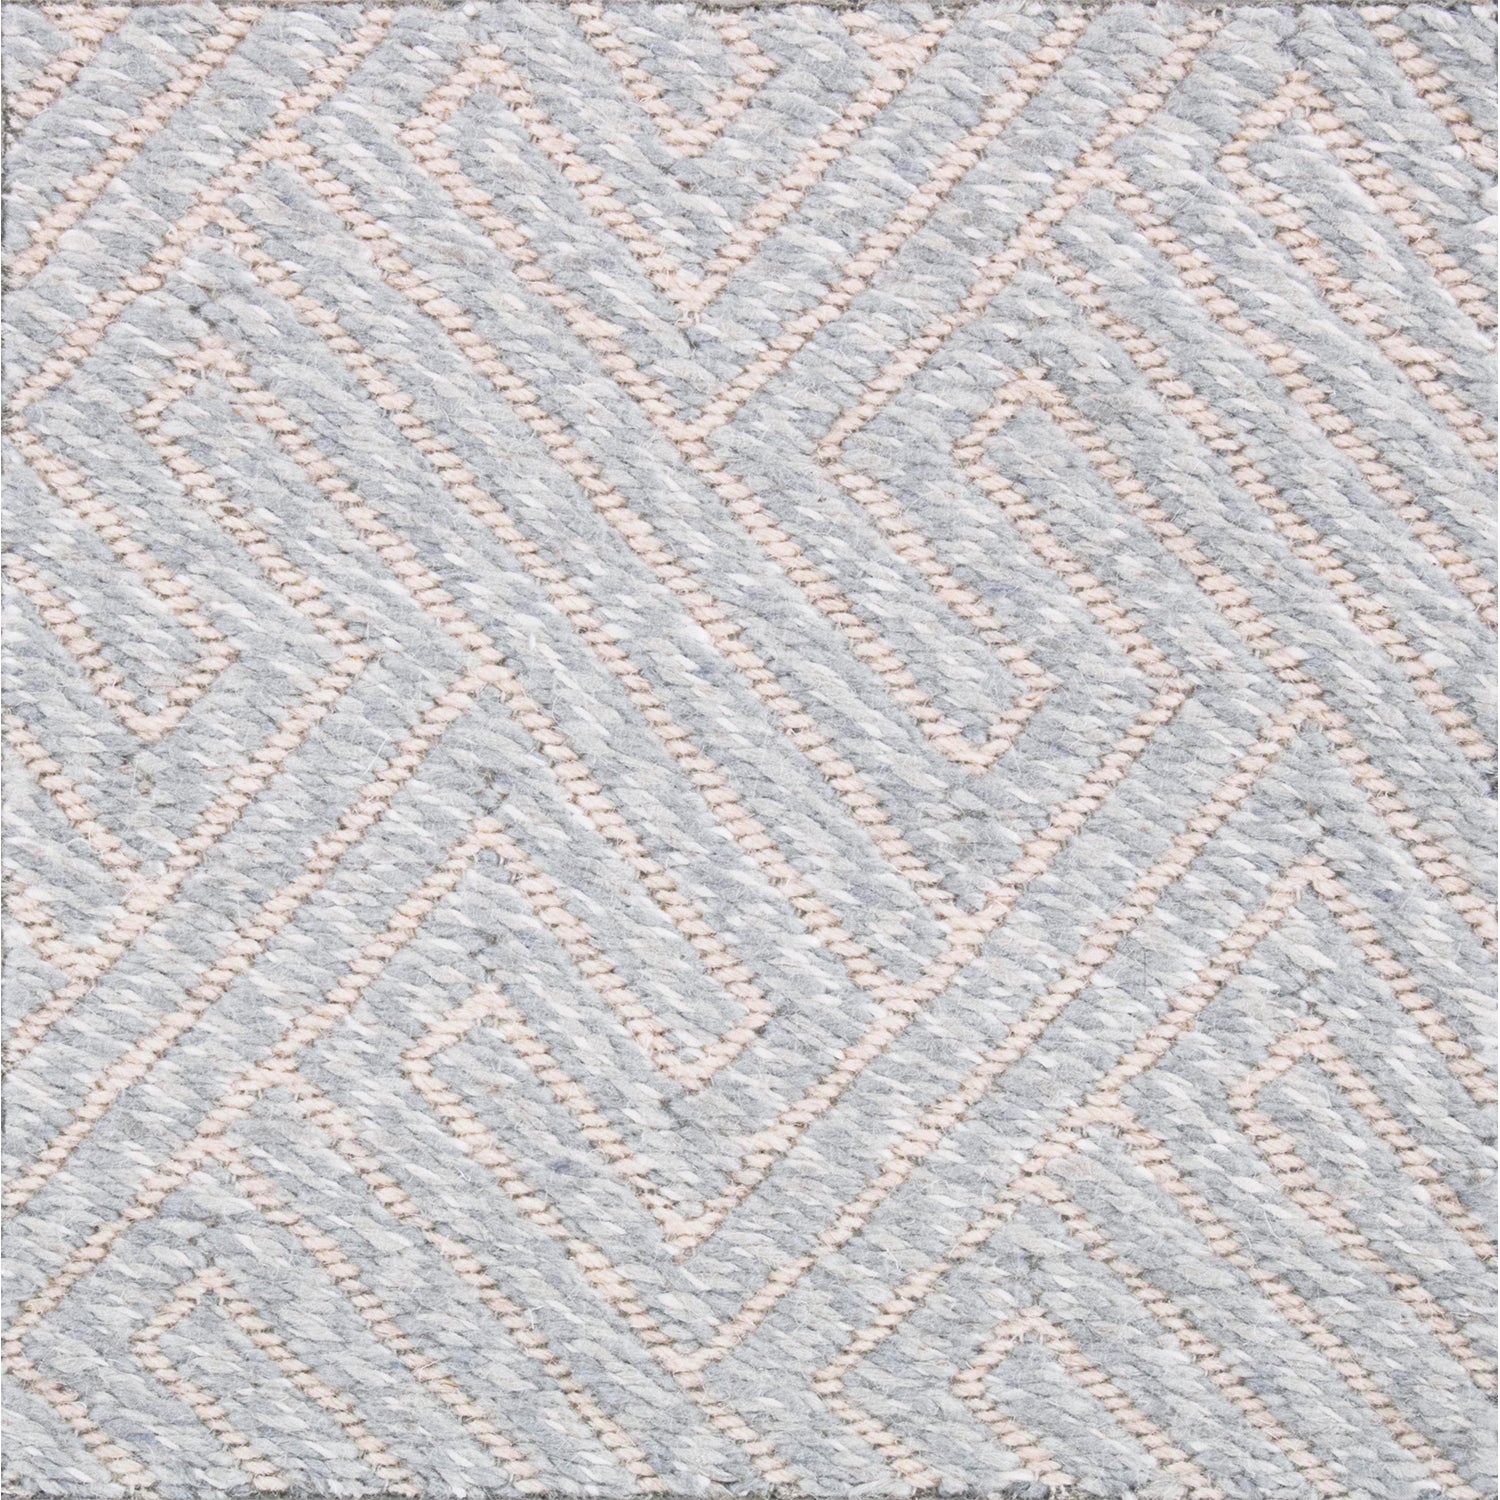 Wool broadloom carpet swatch in a repeating geometric weave pattern in light pink on gray-blue.